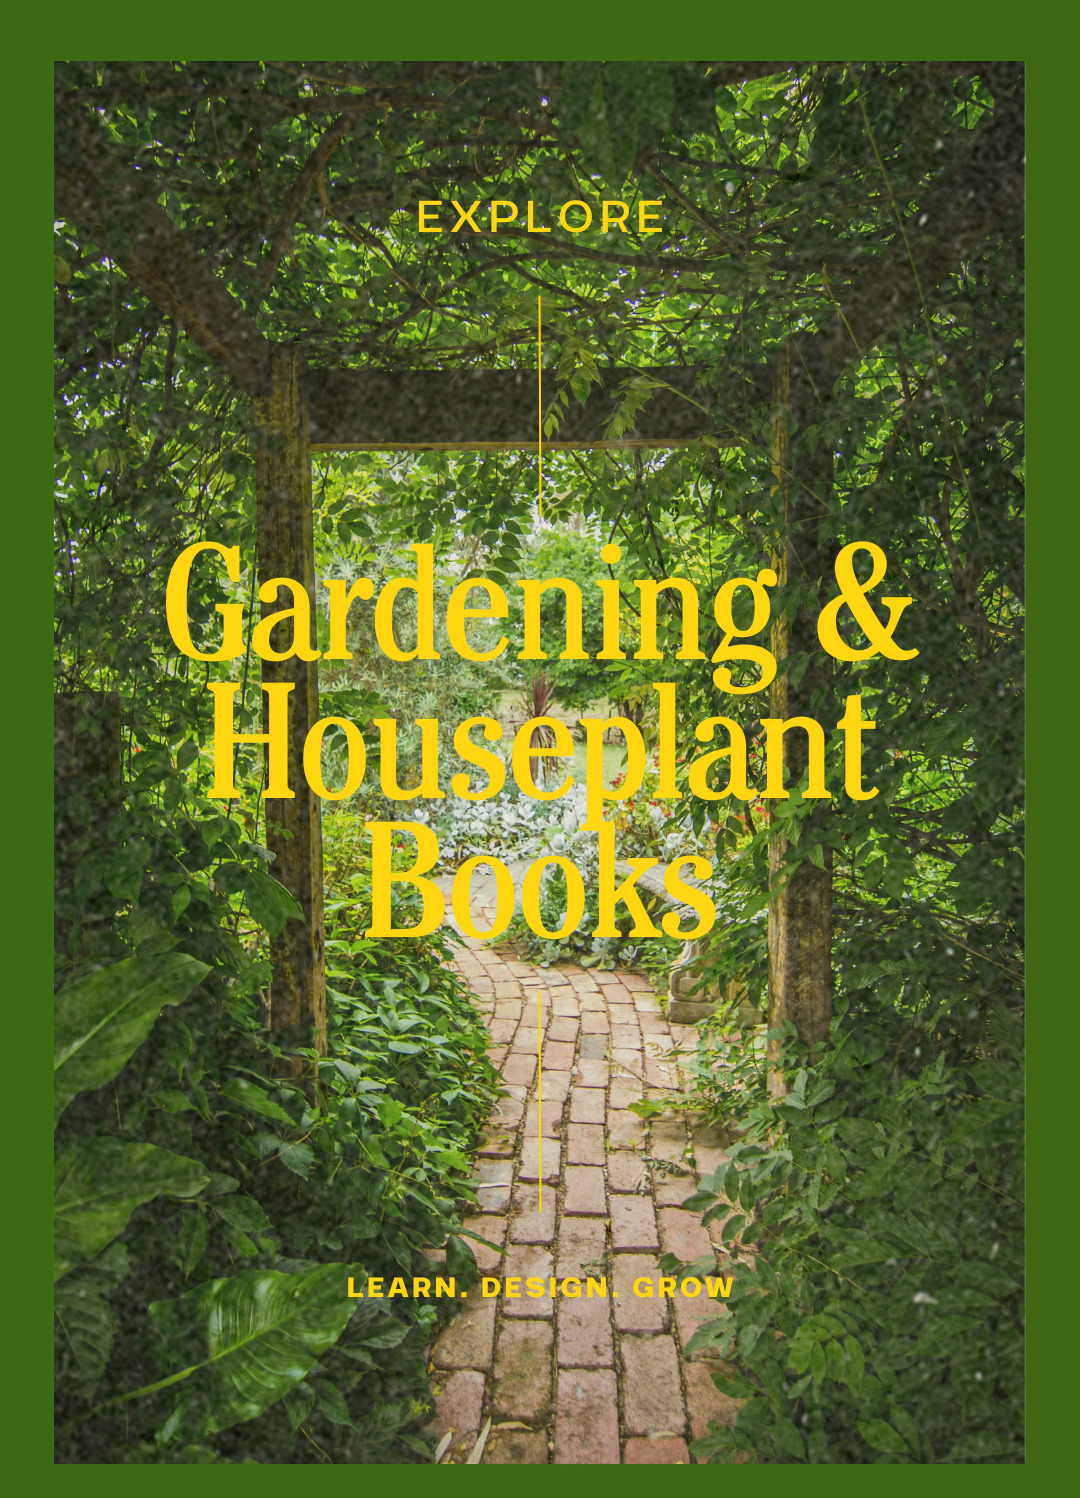 Gardening and Houseplants Books Header Image